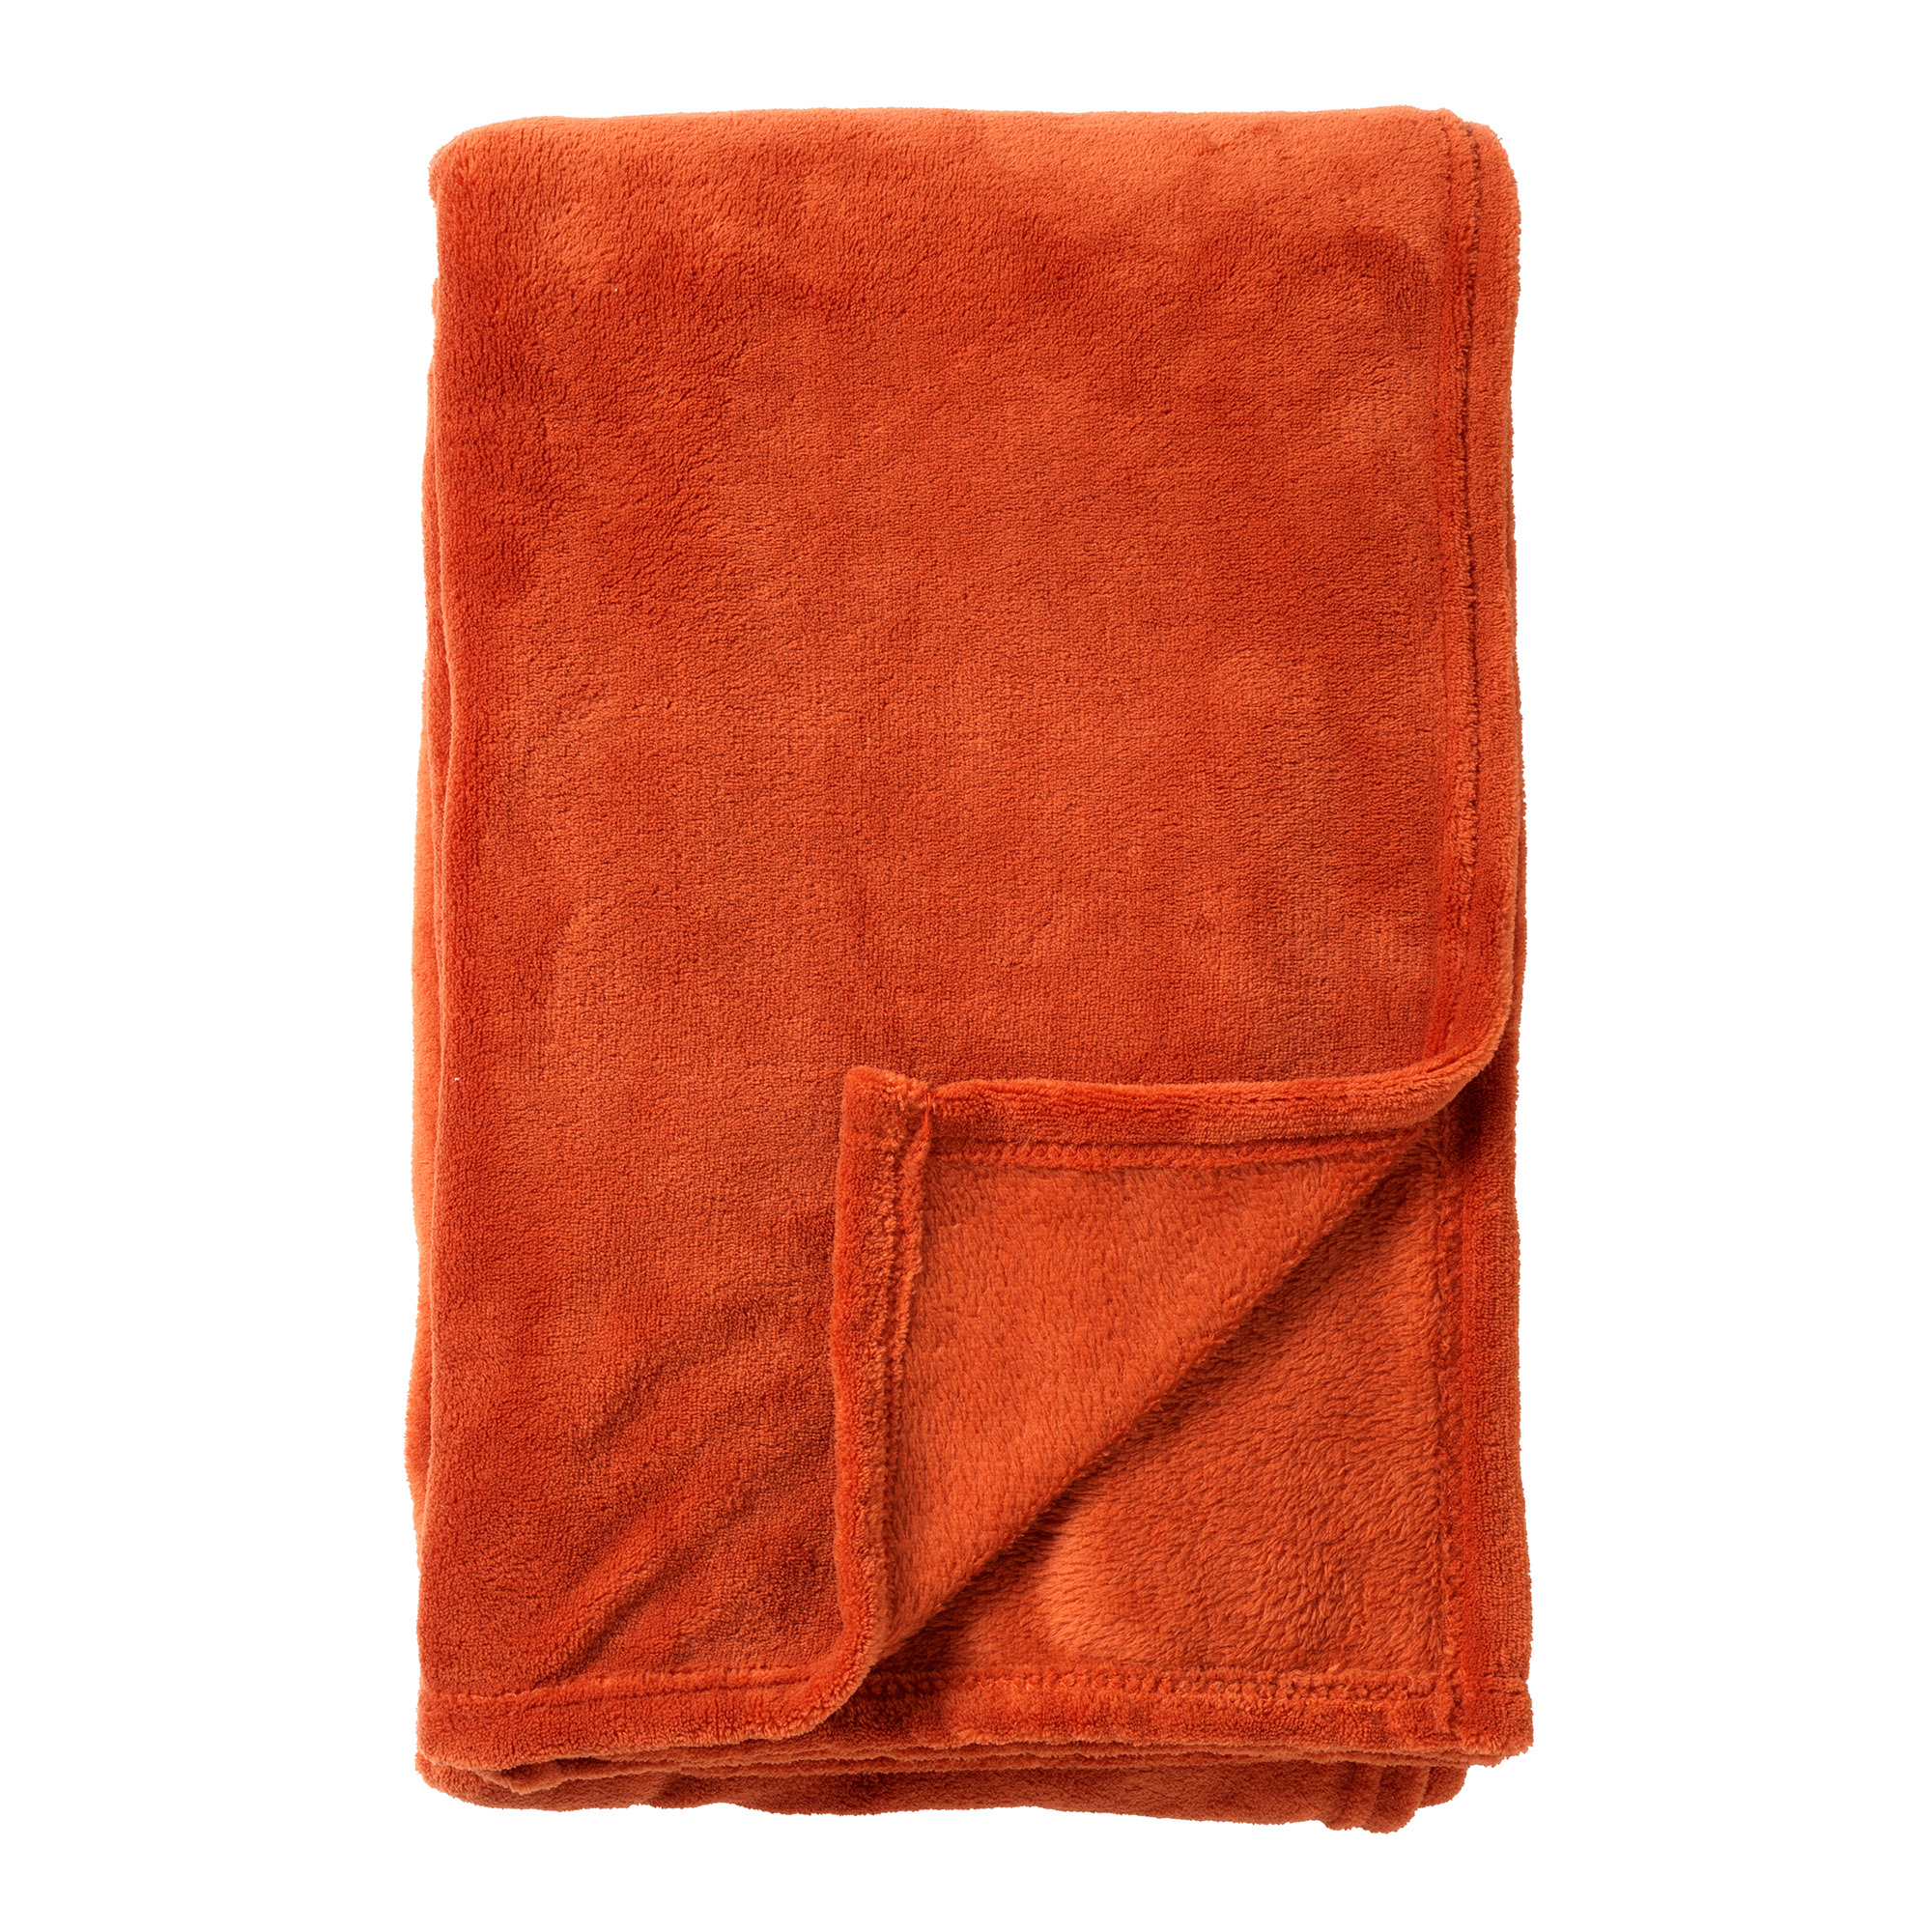 SIDNEY - Plaid Fleece deken van 100% gerecycled polyester – superzacht - Eco Line collection 140x180 cm - Potters Clay - oranje